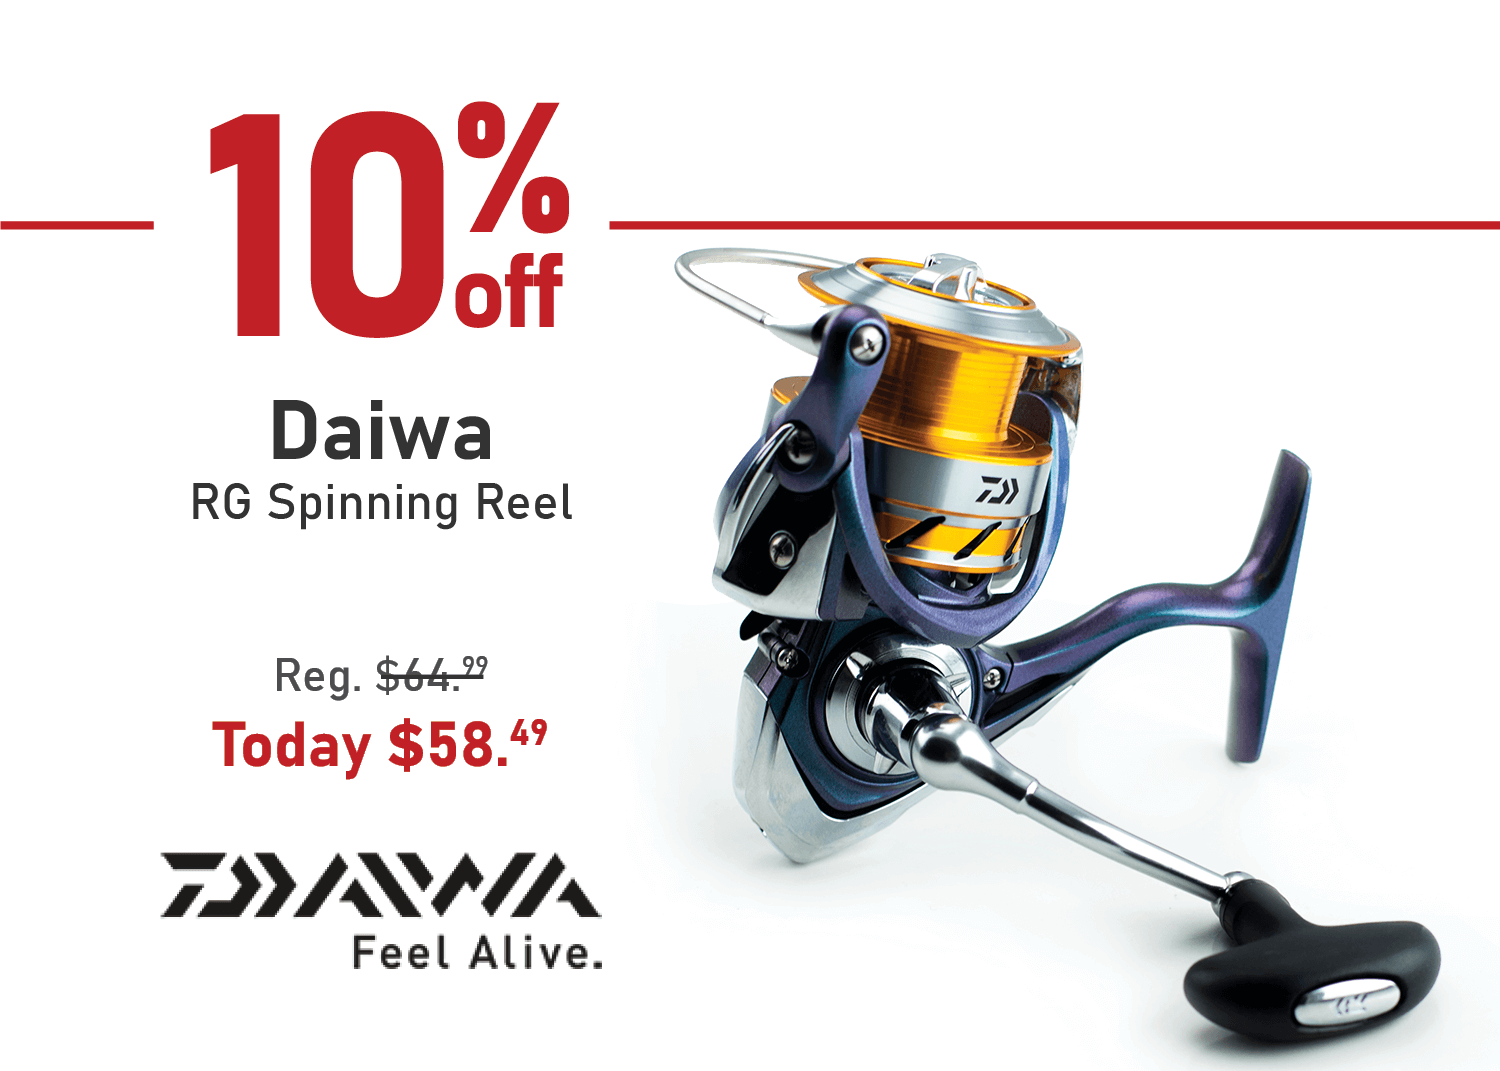 Save 15% on the Daiwa RG Spinning Reel